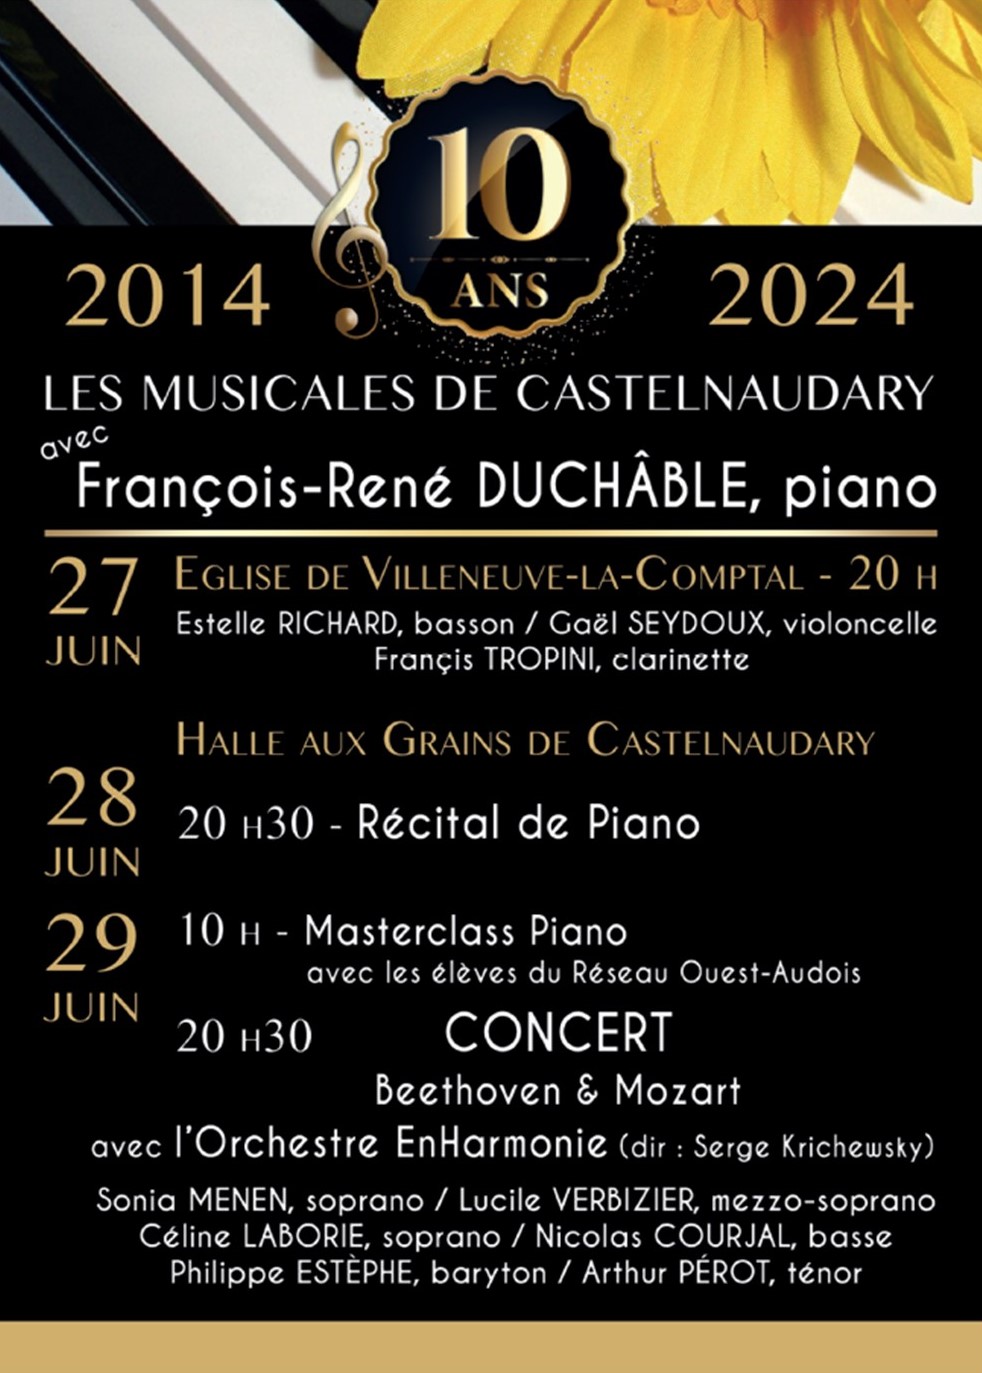 GRAND FESTIVAL DES MUSICALES DE CASTELNAUDARY - 10 ANS - 2014/2024